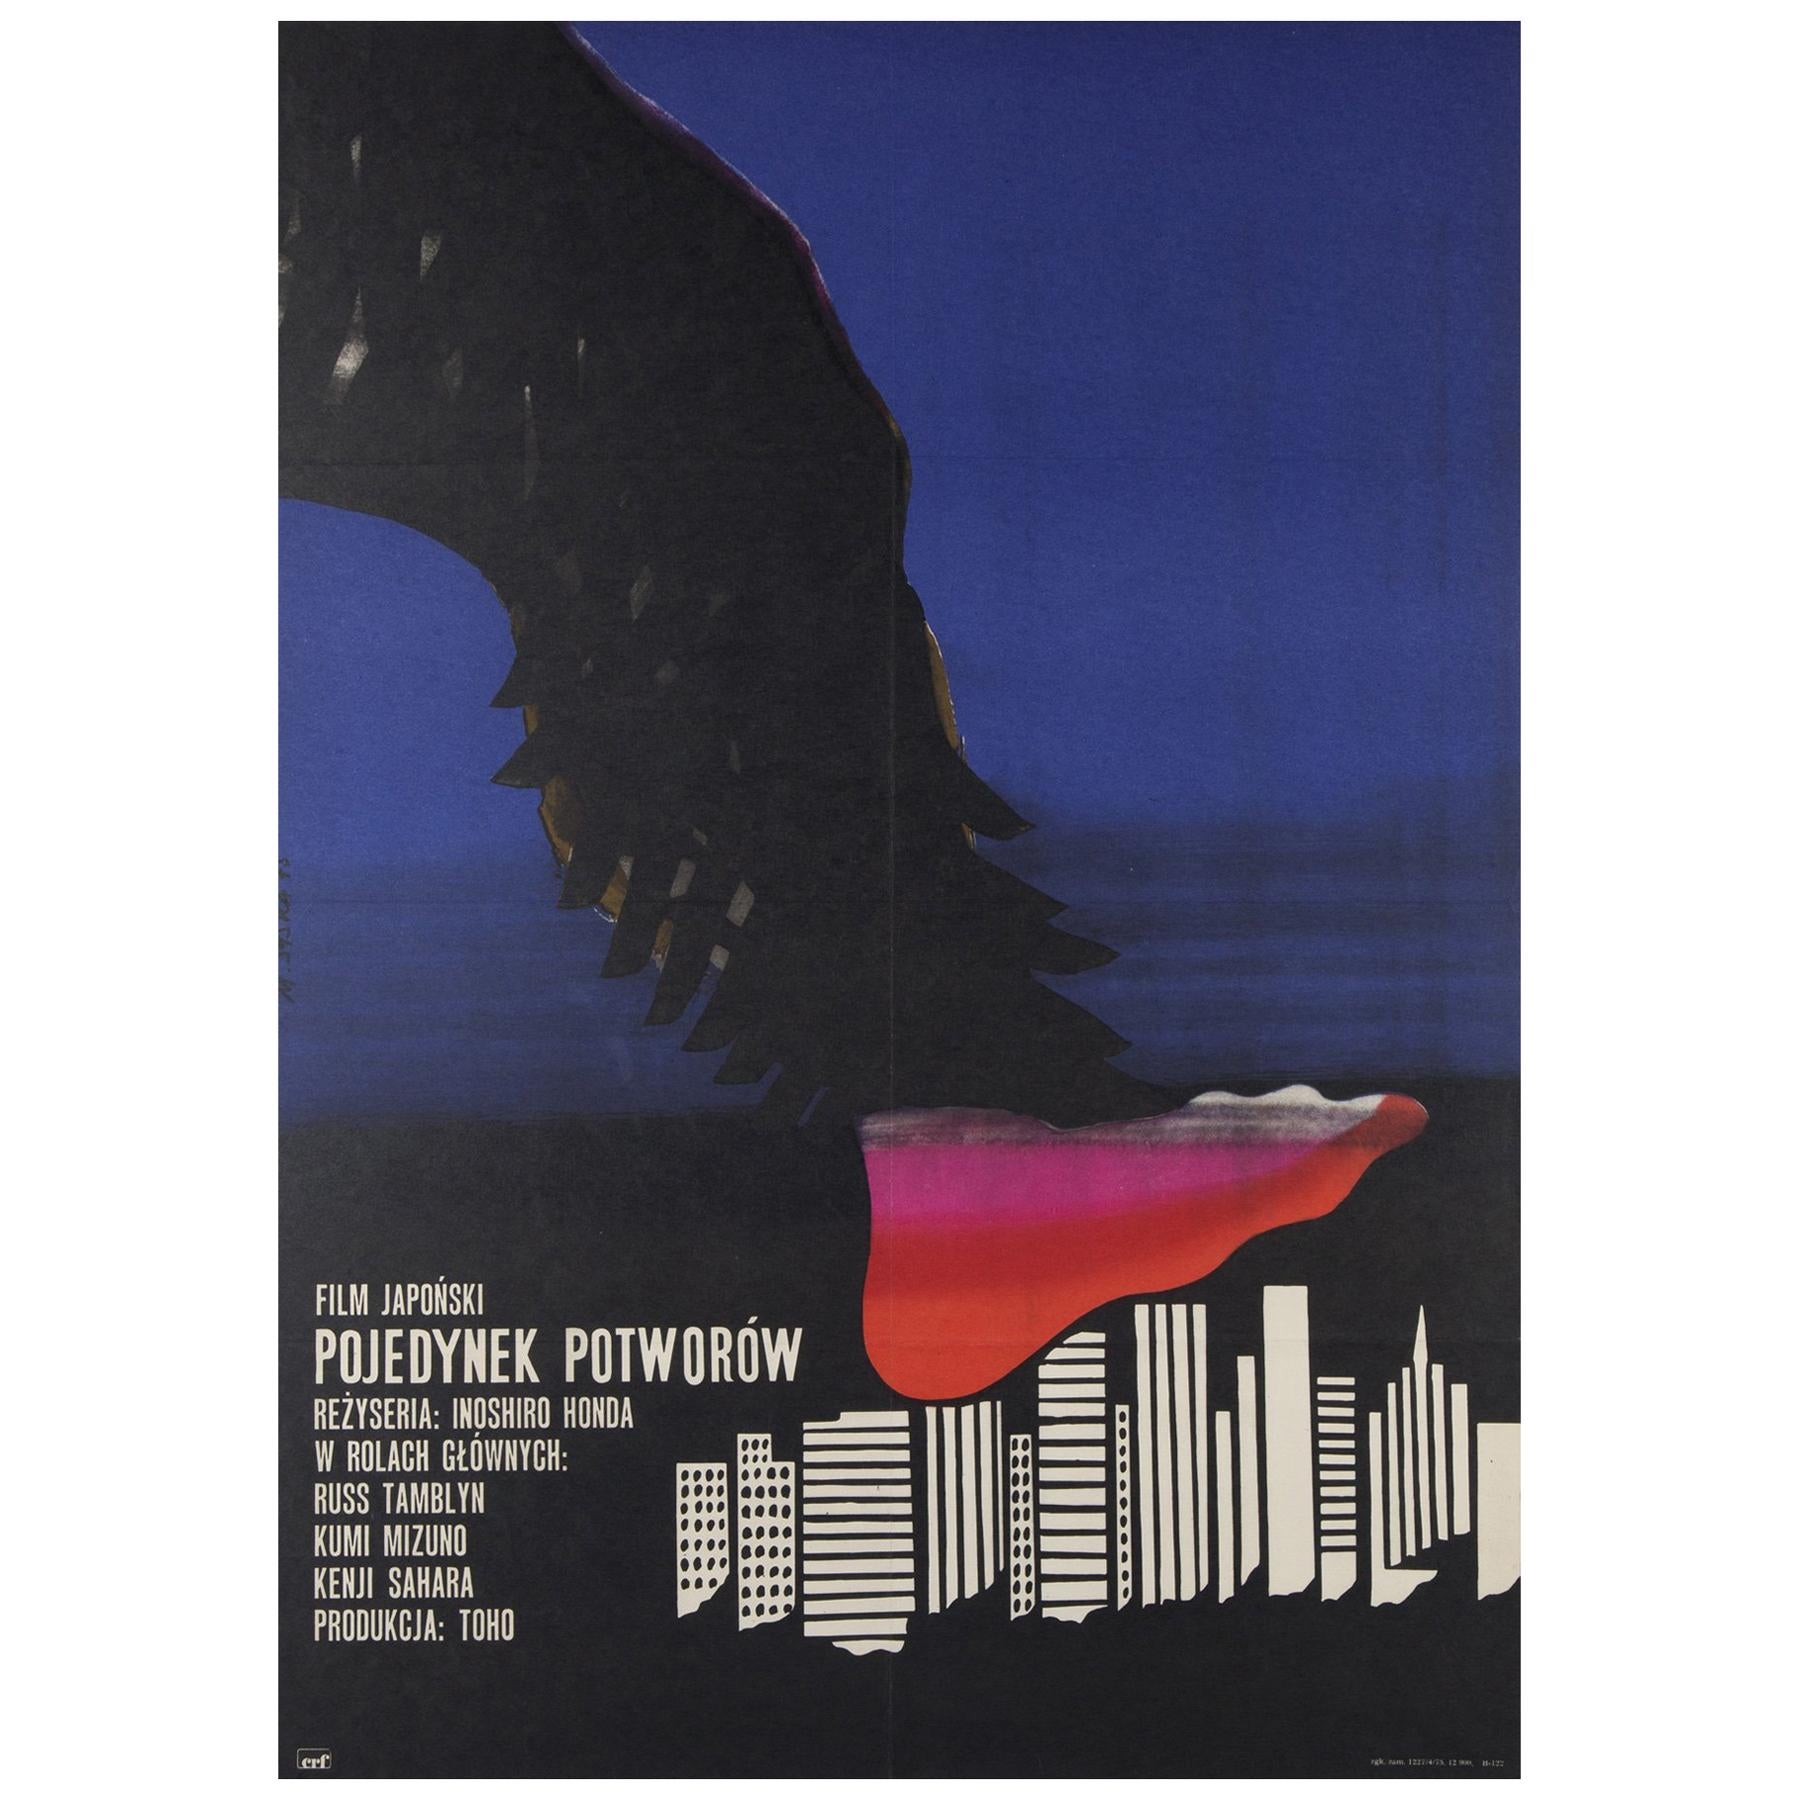 'War of the Gargantuas' Original Polish Film Poster, Jerzy Flisak, 1970